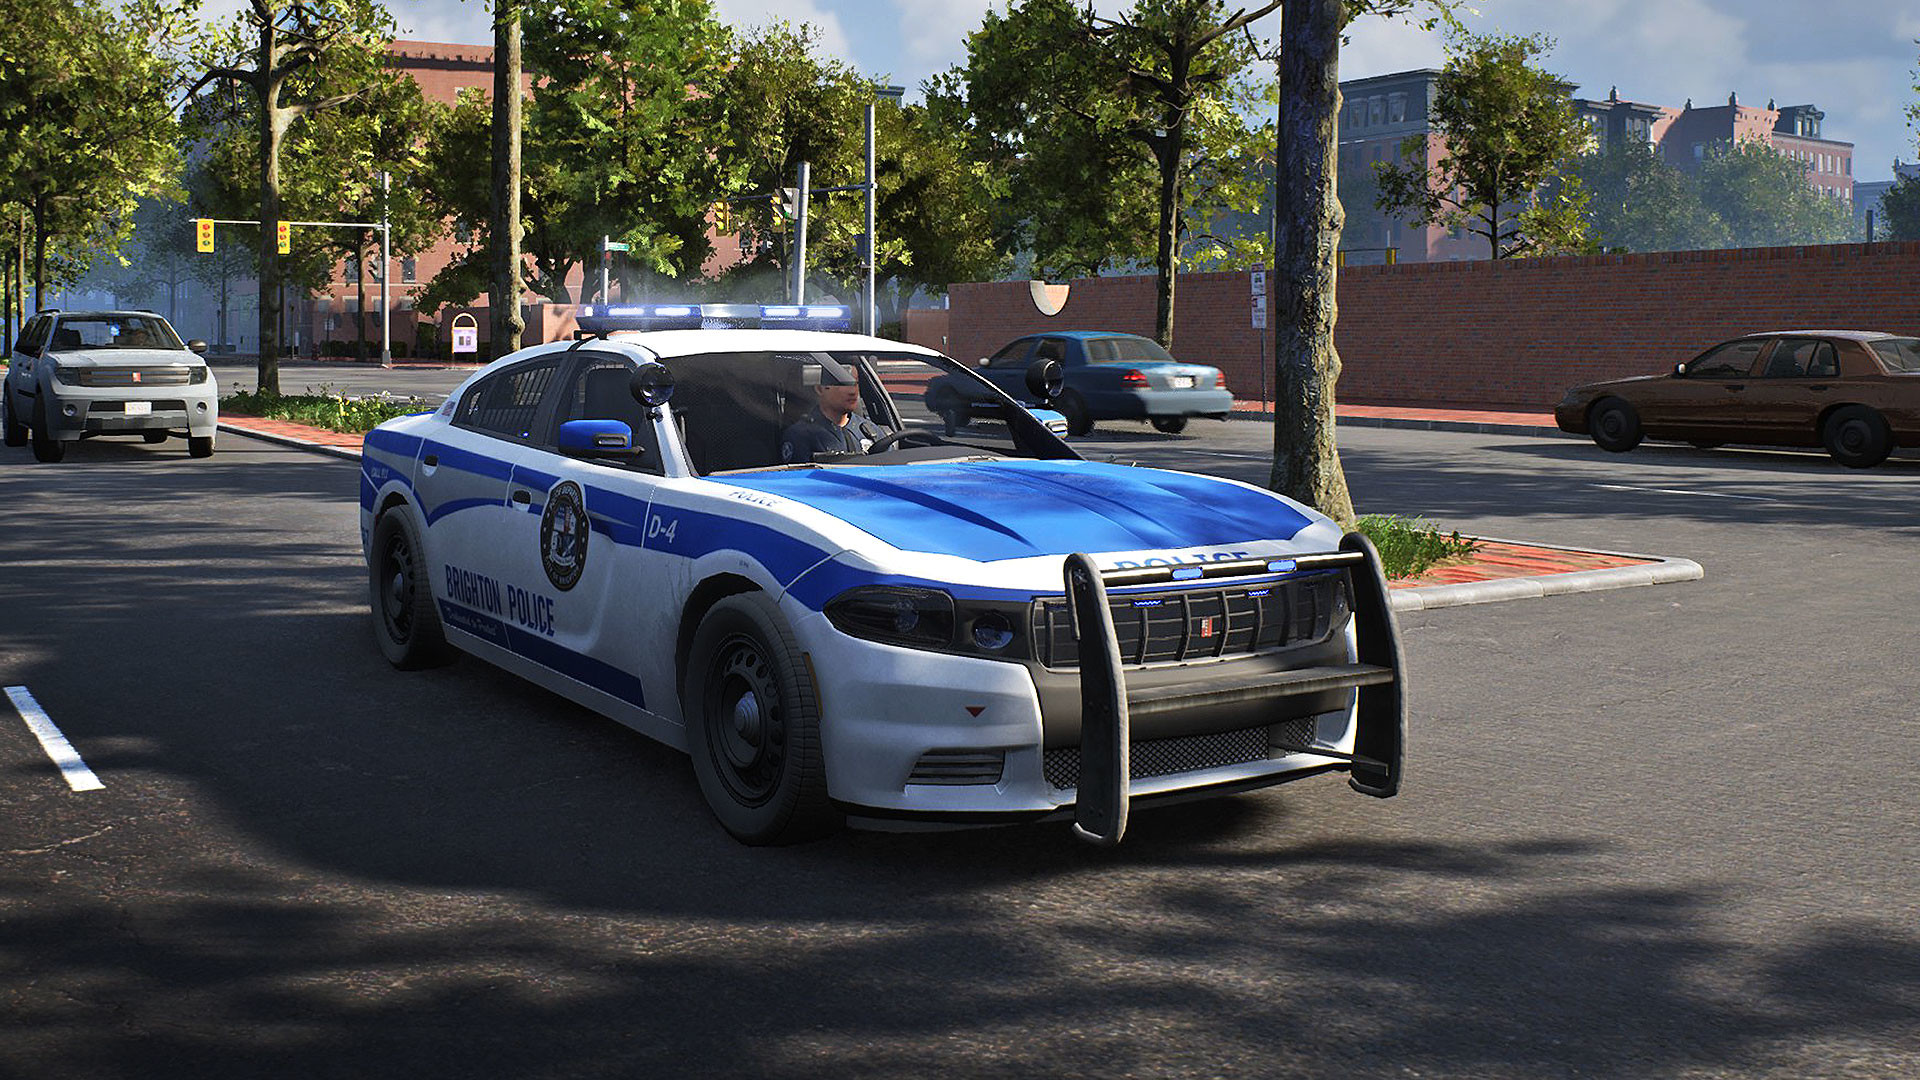 Police Simulator: Patrol Officers screenshot 46923